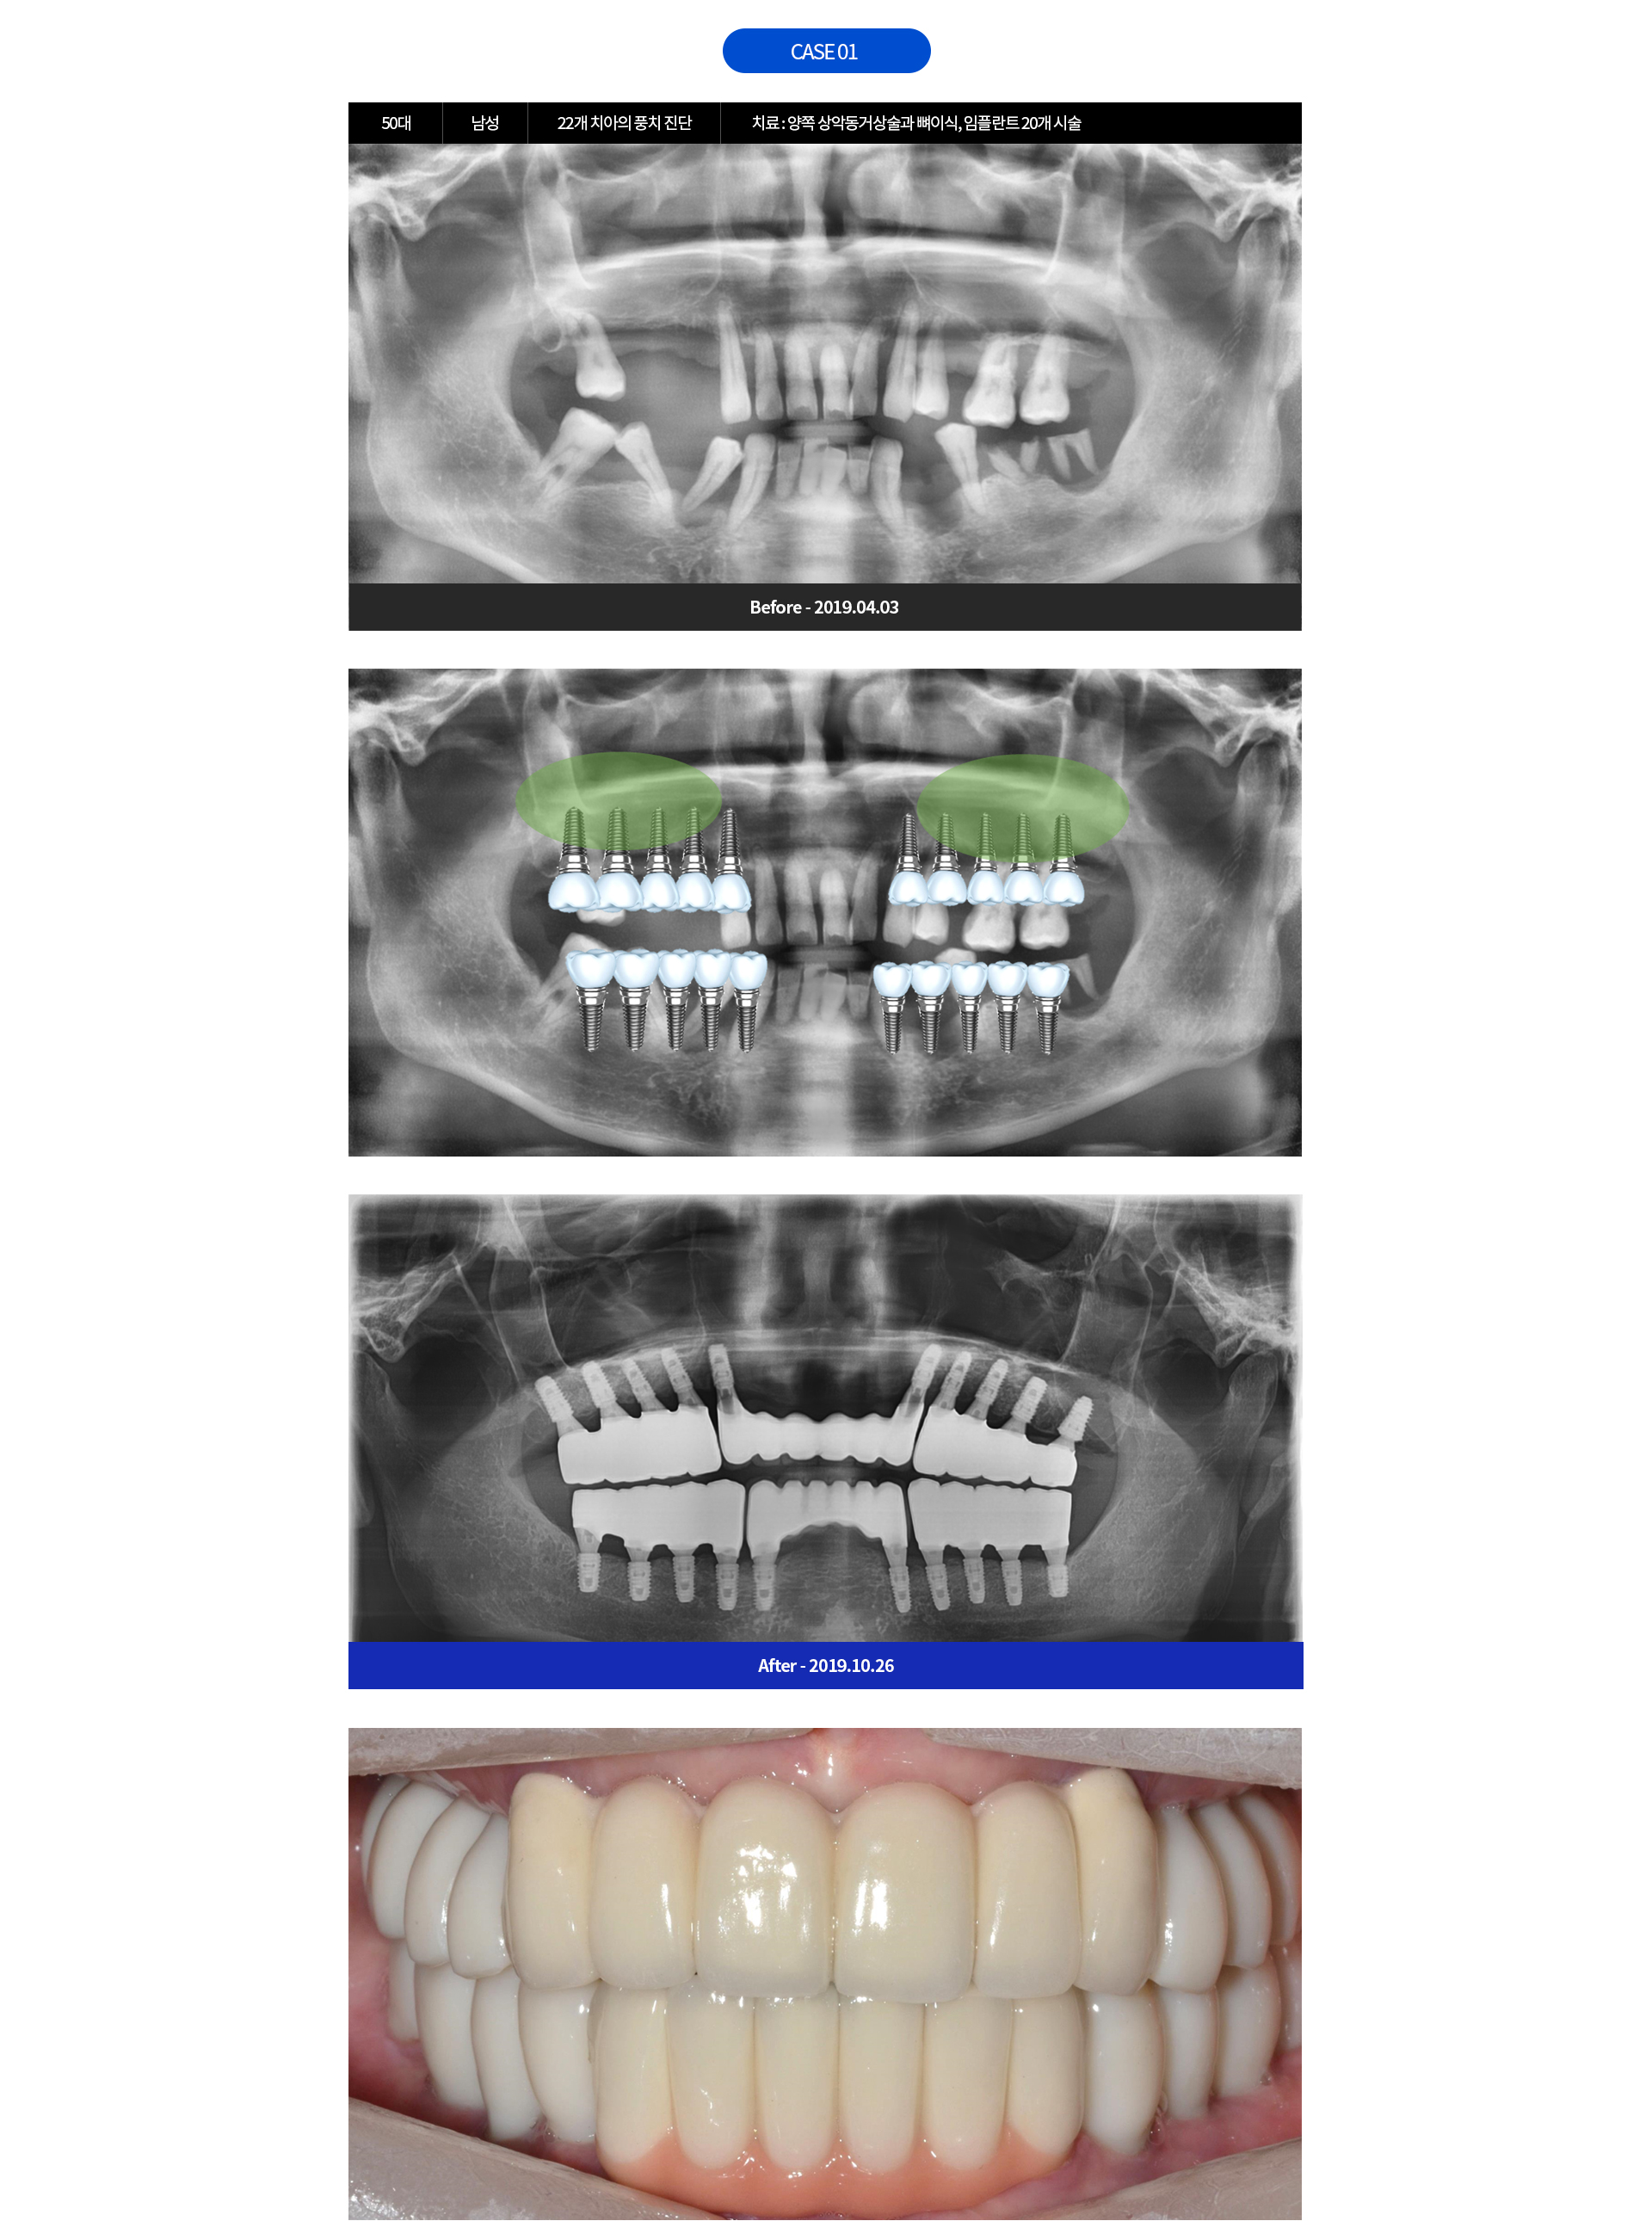 CASE 01 - 50대 남성 22개 치아의 풍치 진단 | 치료 : 양쪽 상악동거상술과 뼈이식, 임플란트 20개 시술